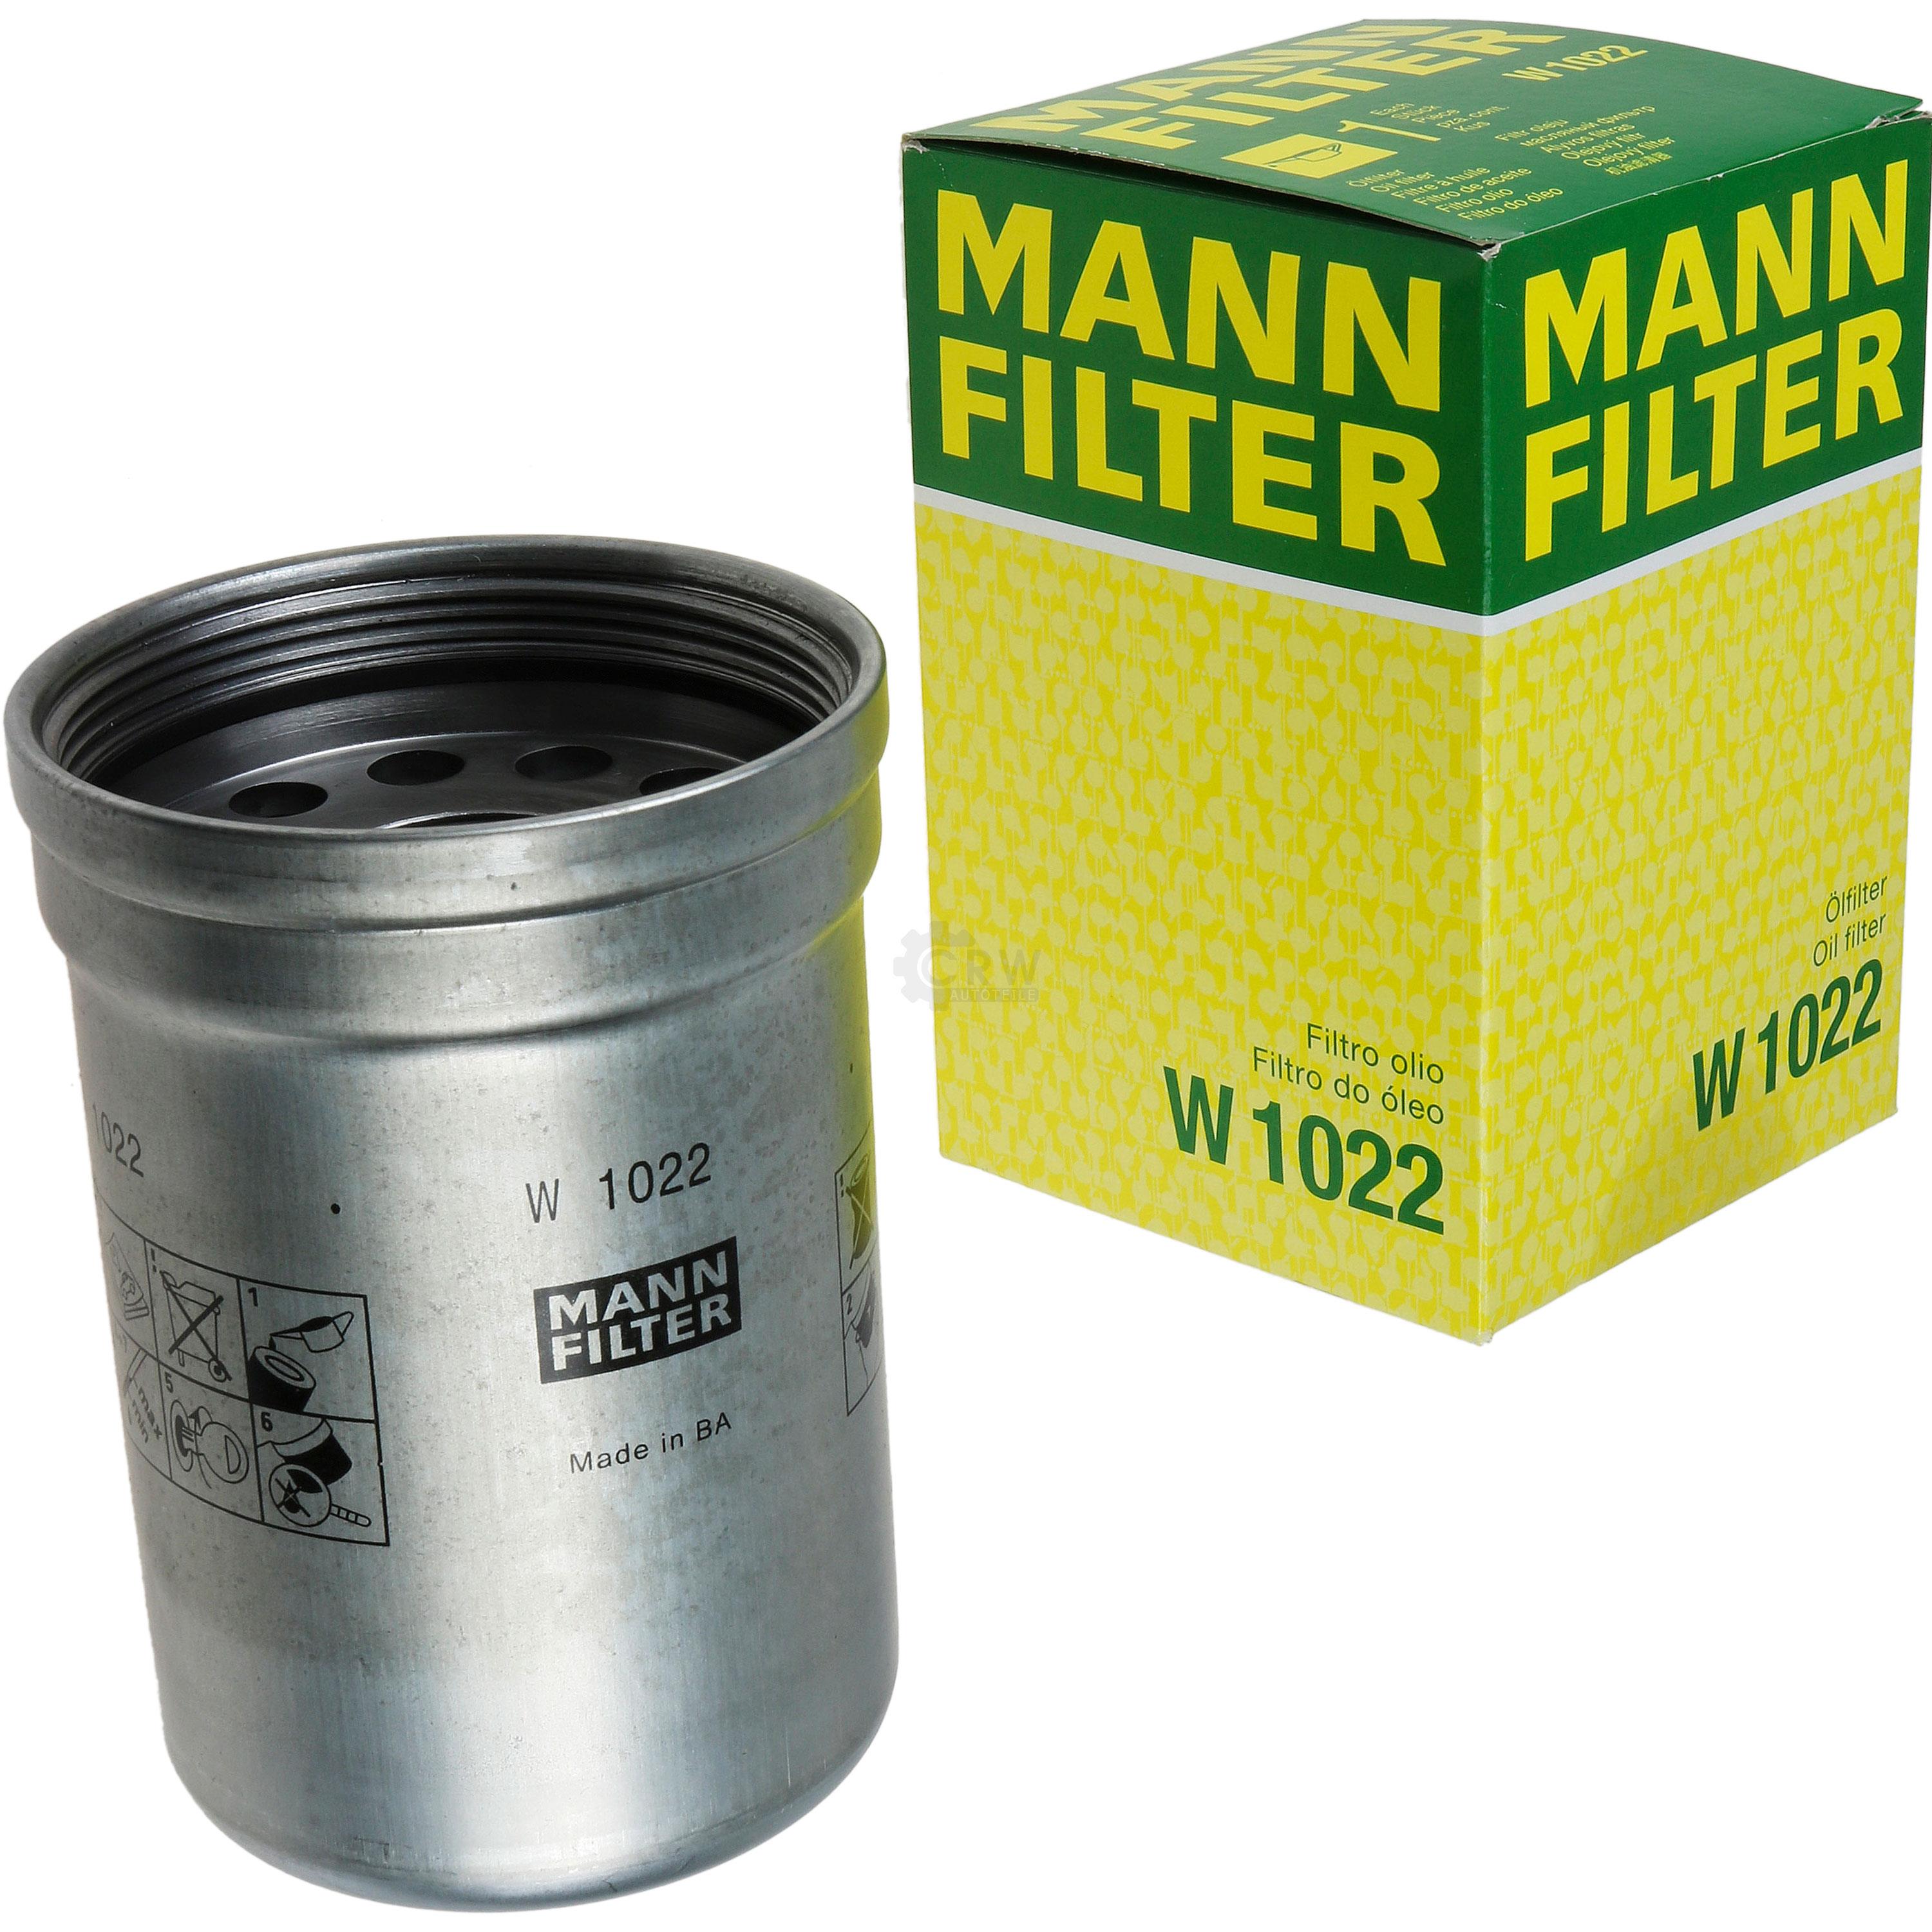 MANN-FILTER Ölfilter Oelfilter W 1022 Oil Filter